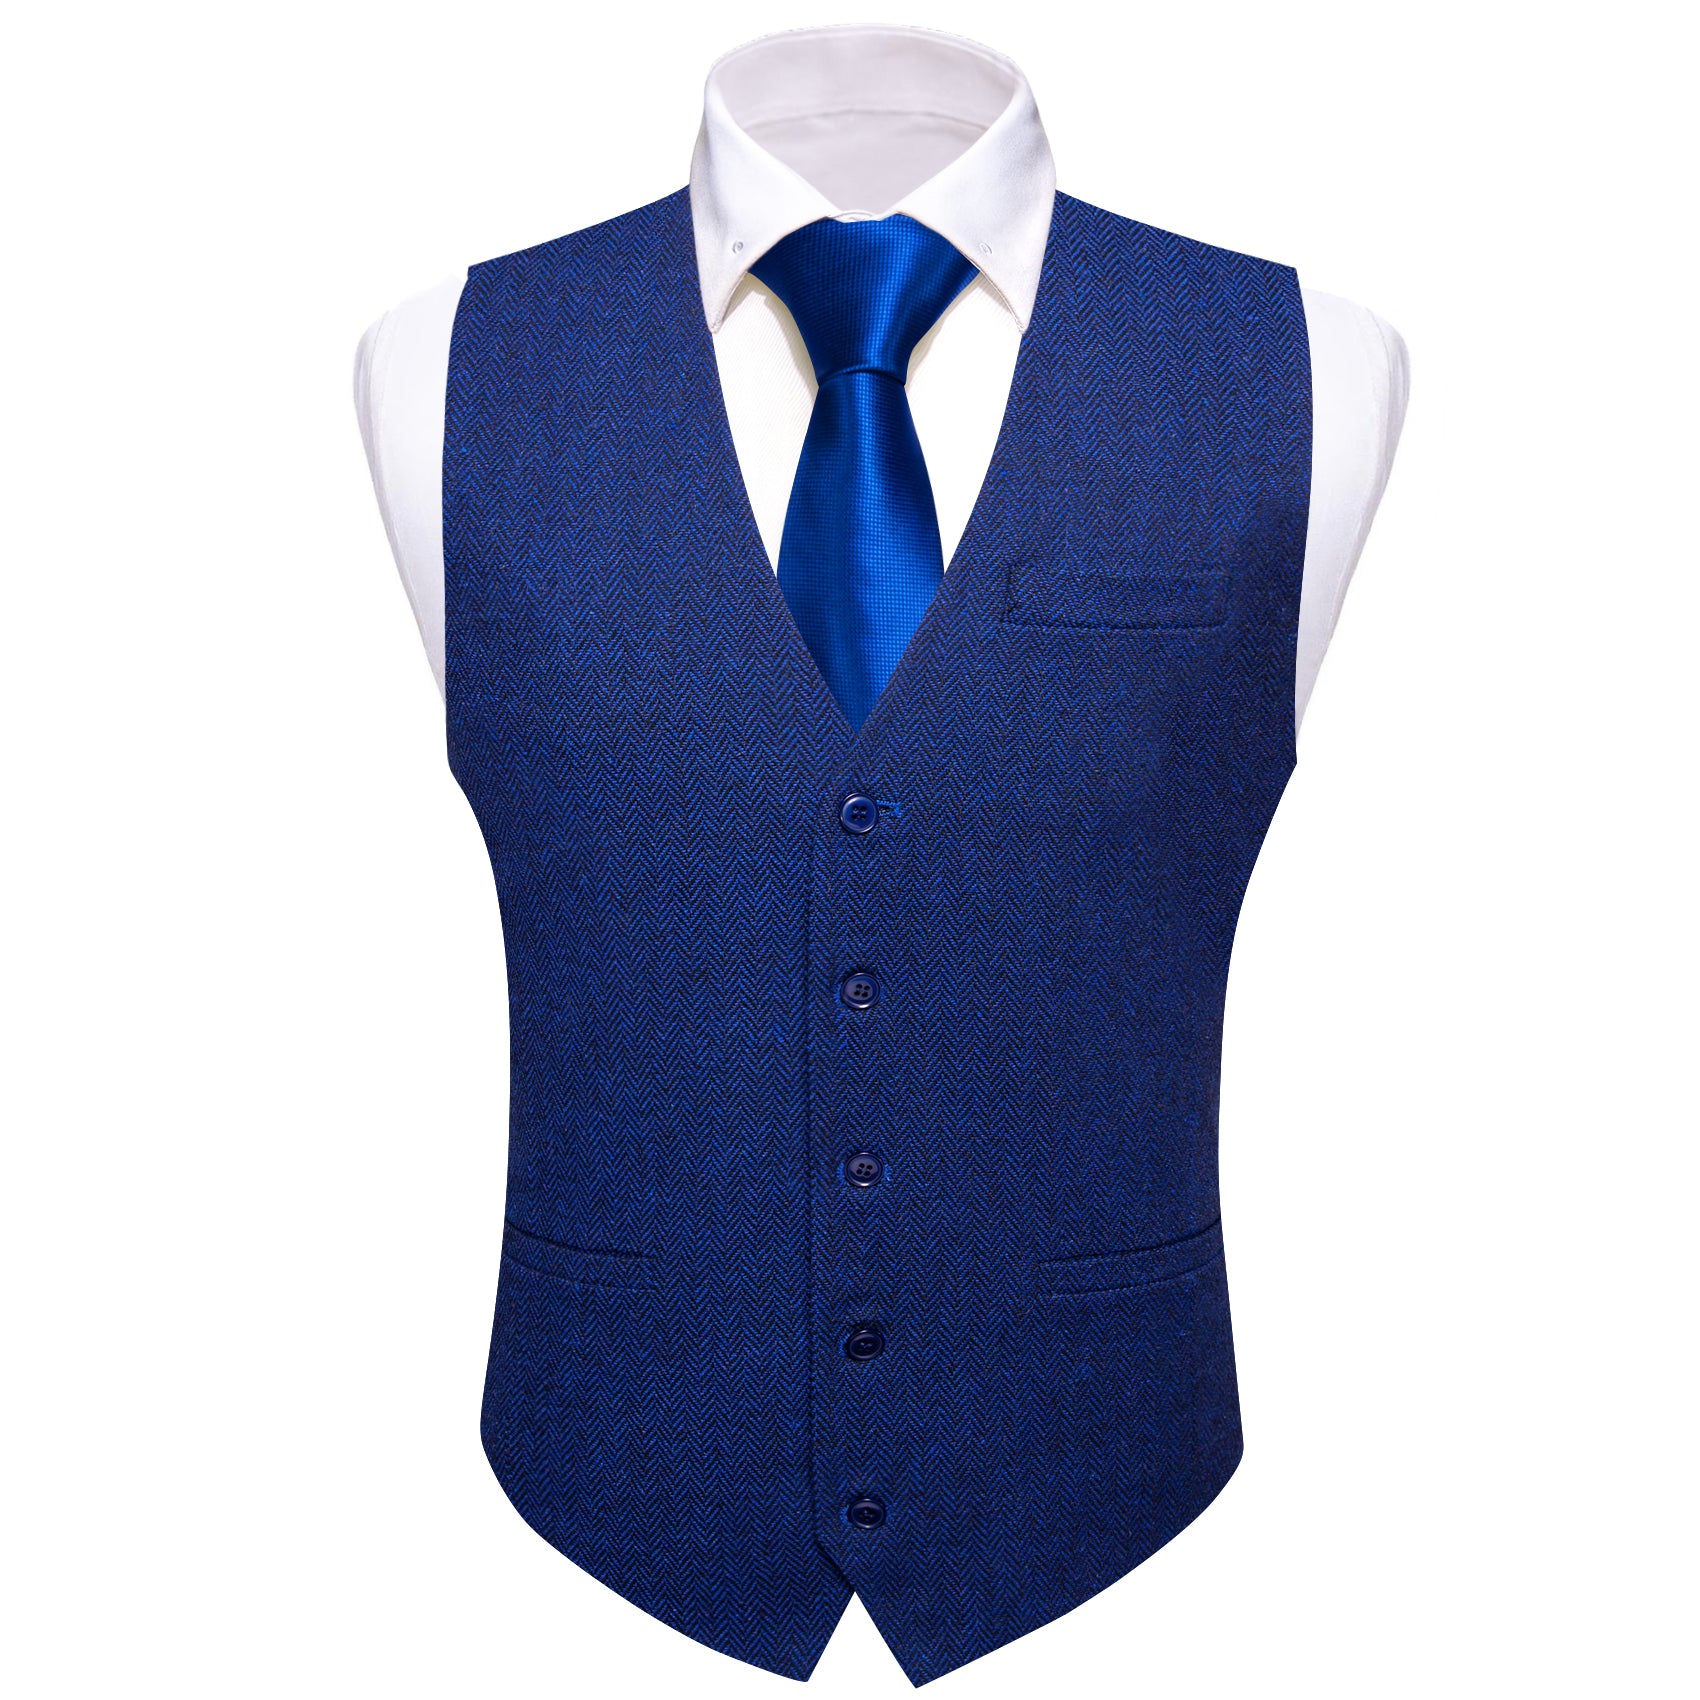 Barry.wang Classy Blue Solid Waistcoat Vest